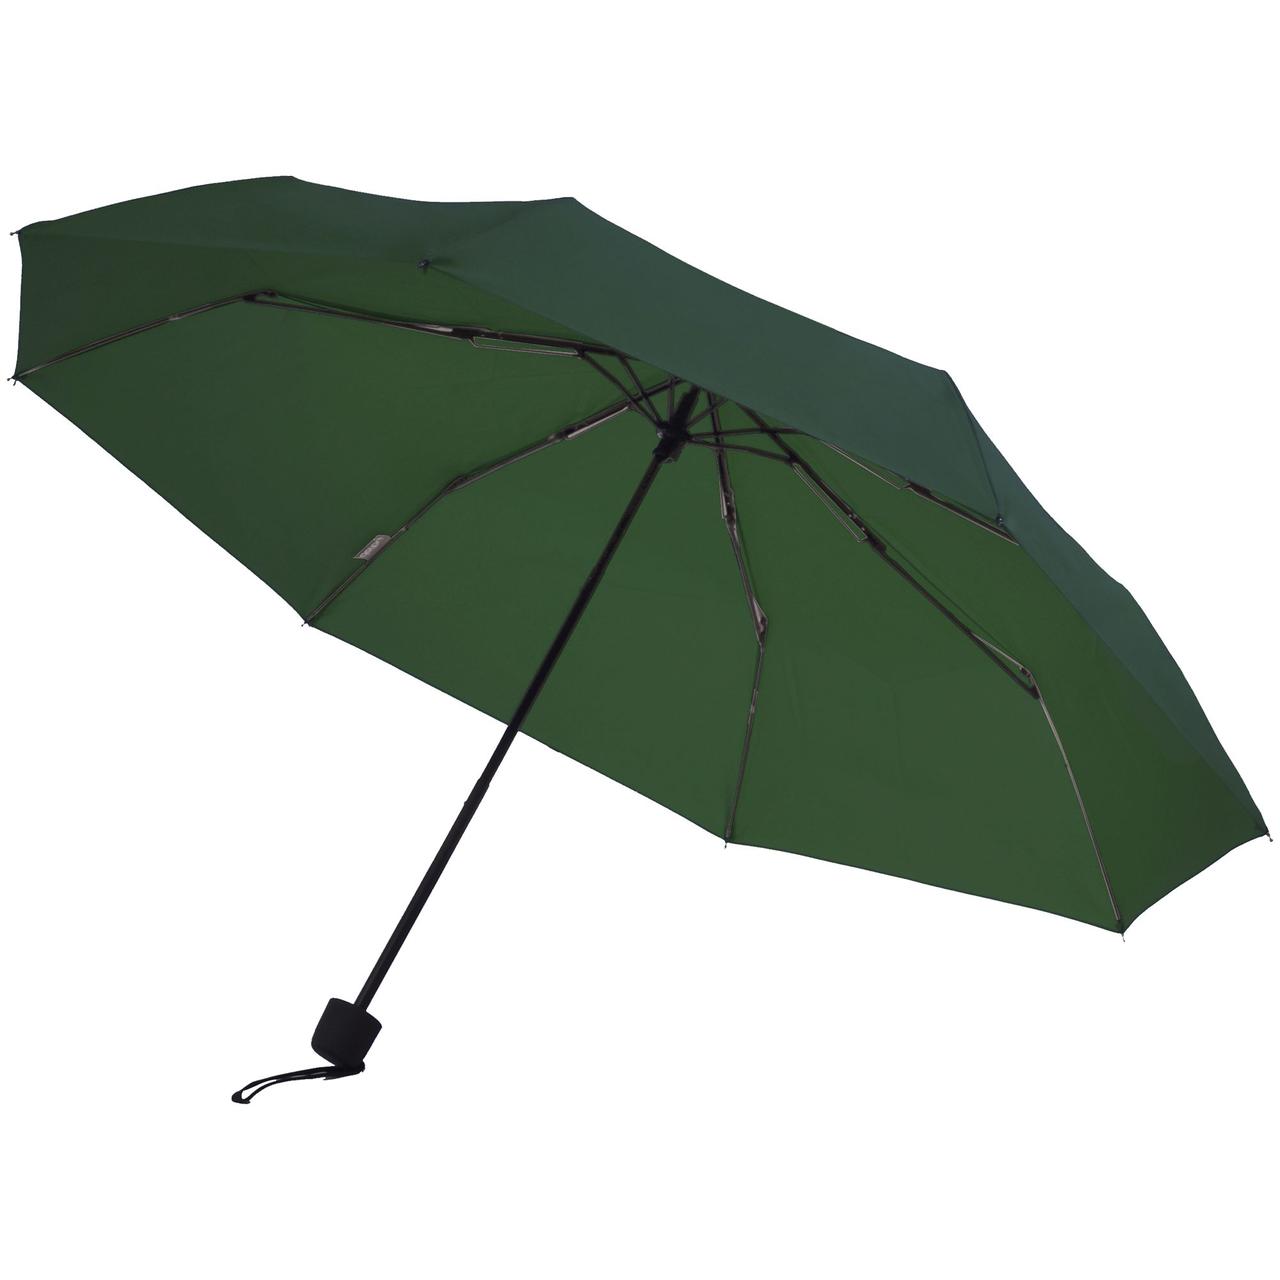 Зонт складной Hit Mini, зеленый (артикул 11839.90), фото 1